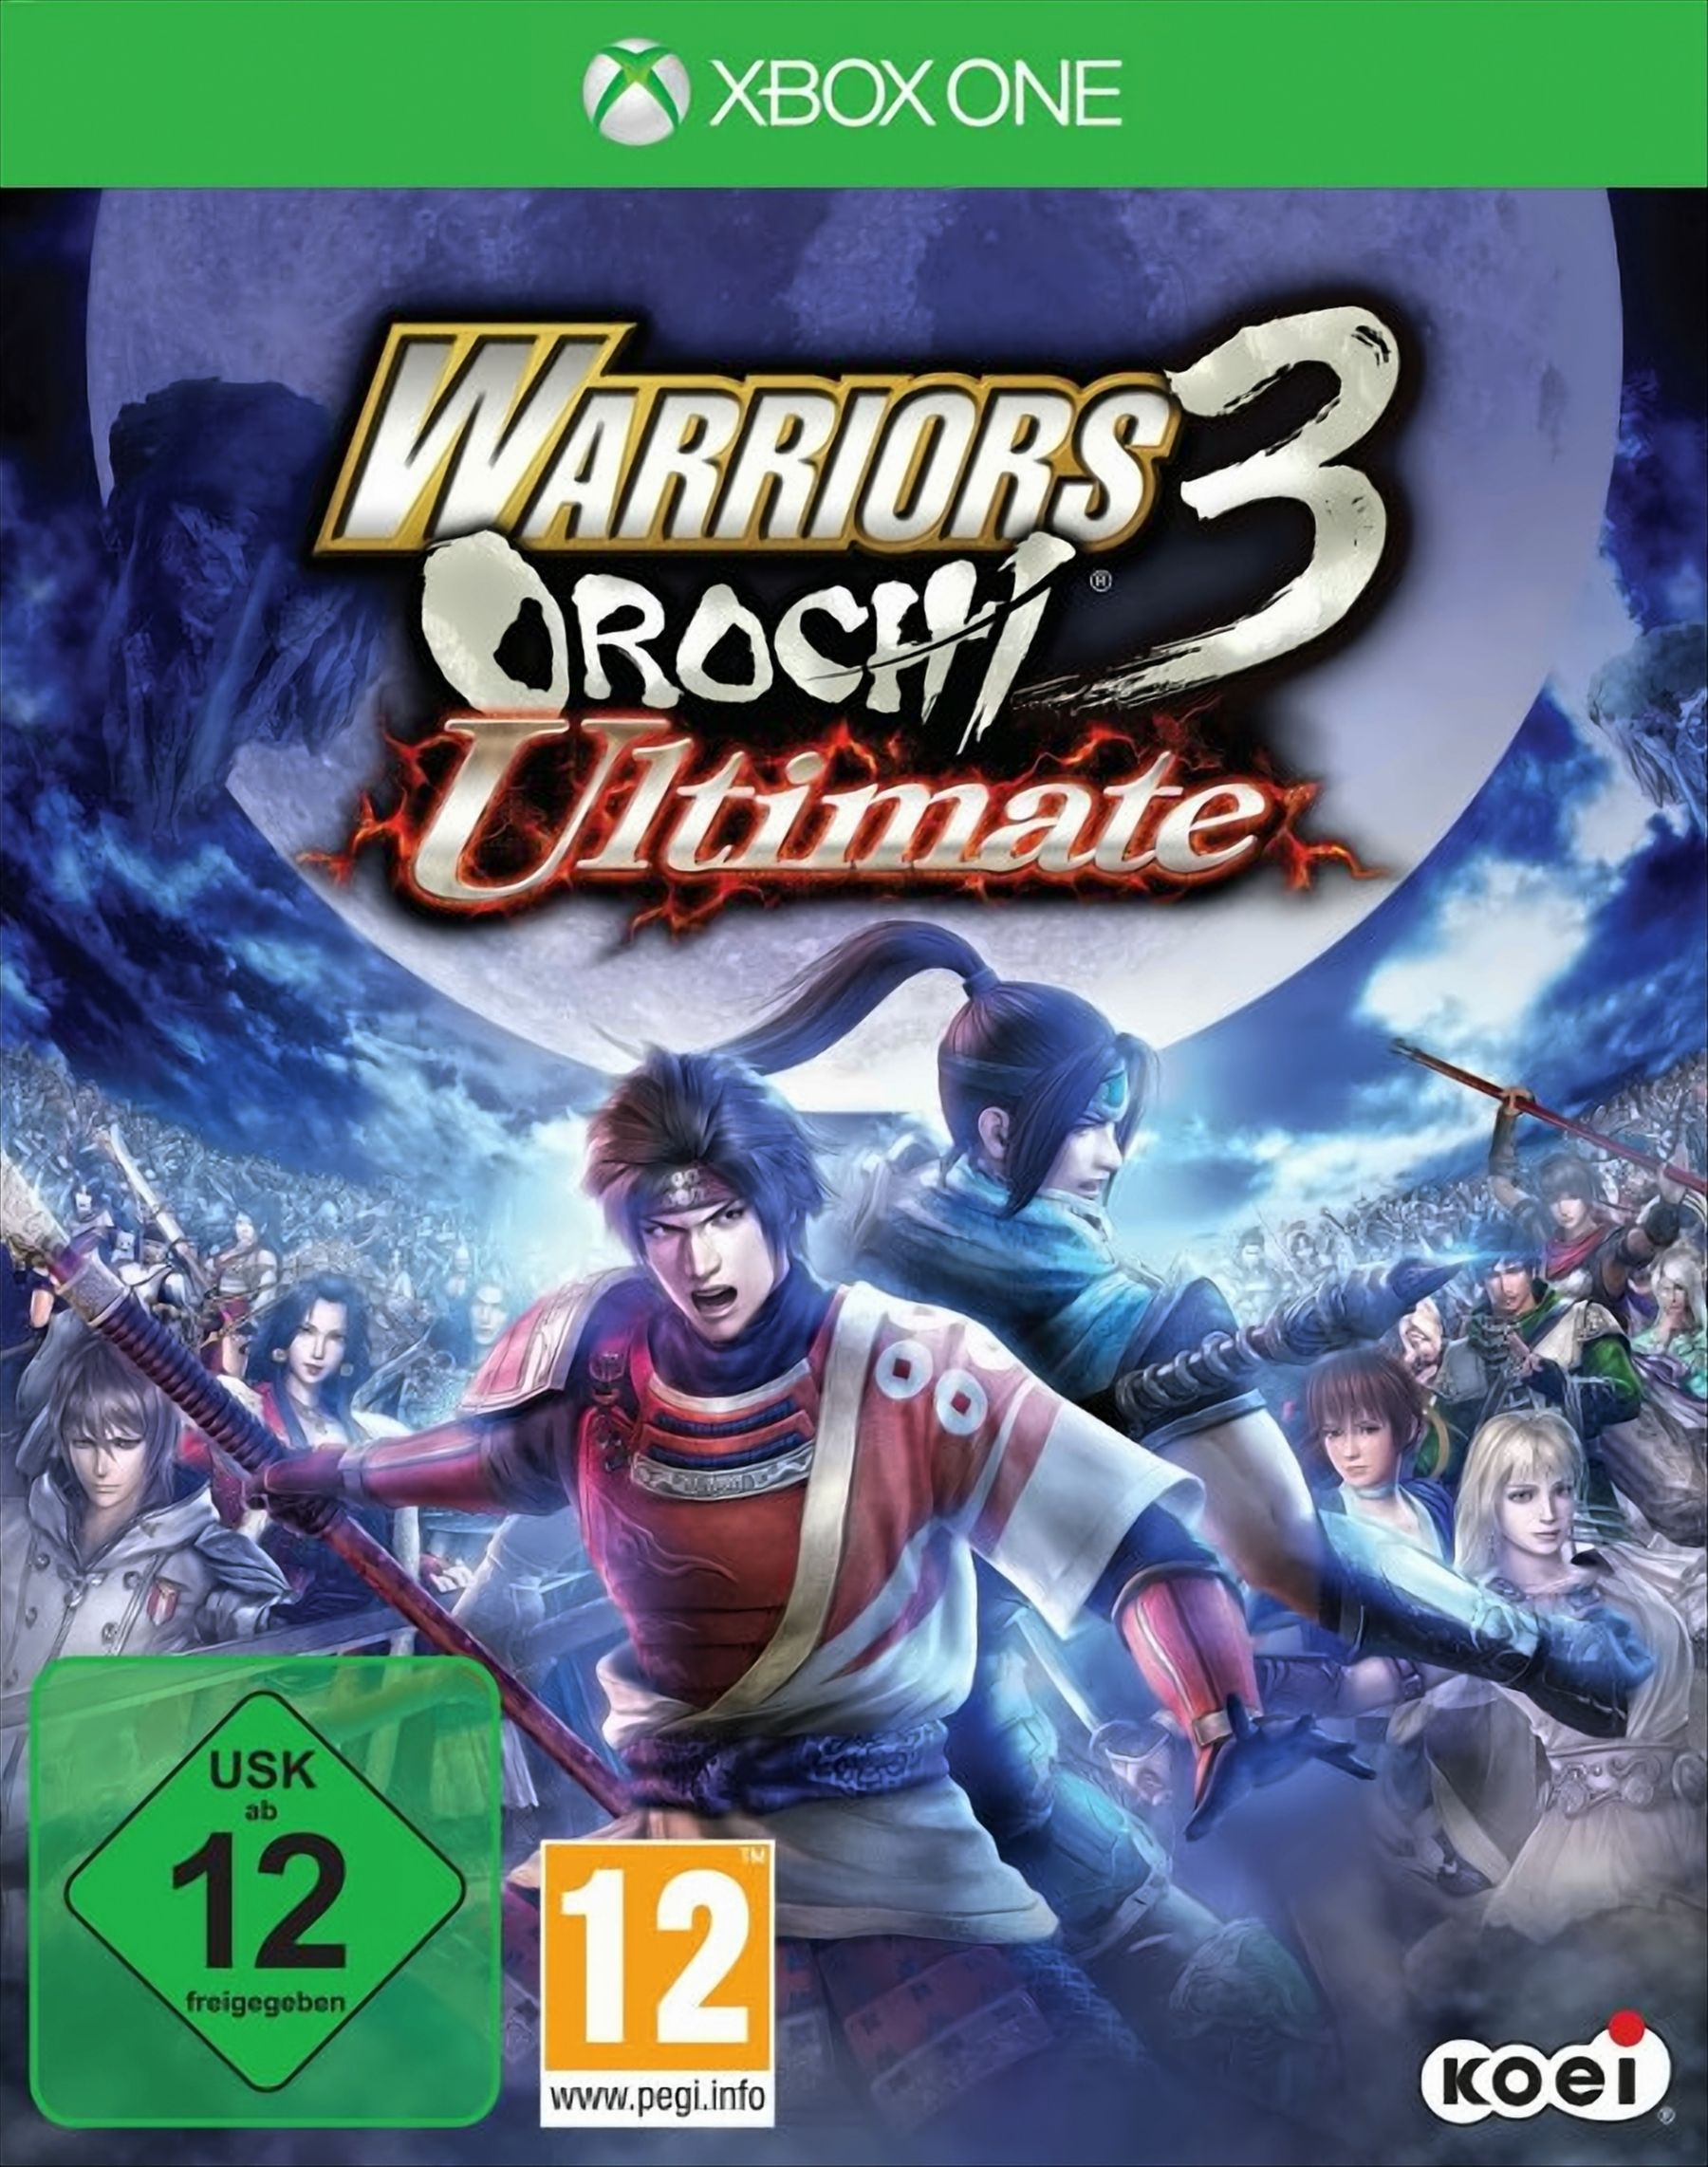 One] [Xbox - 3 Warriors Ultimate Orochi